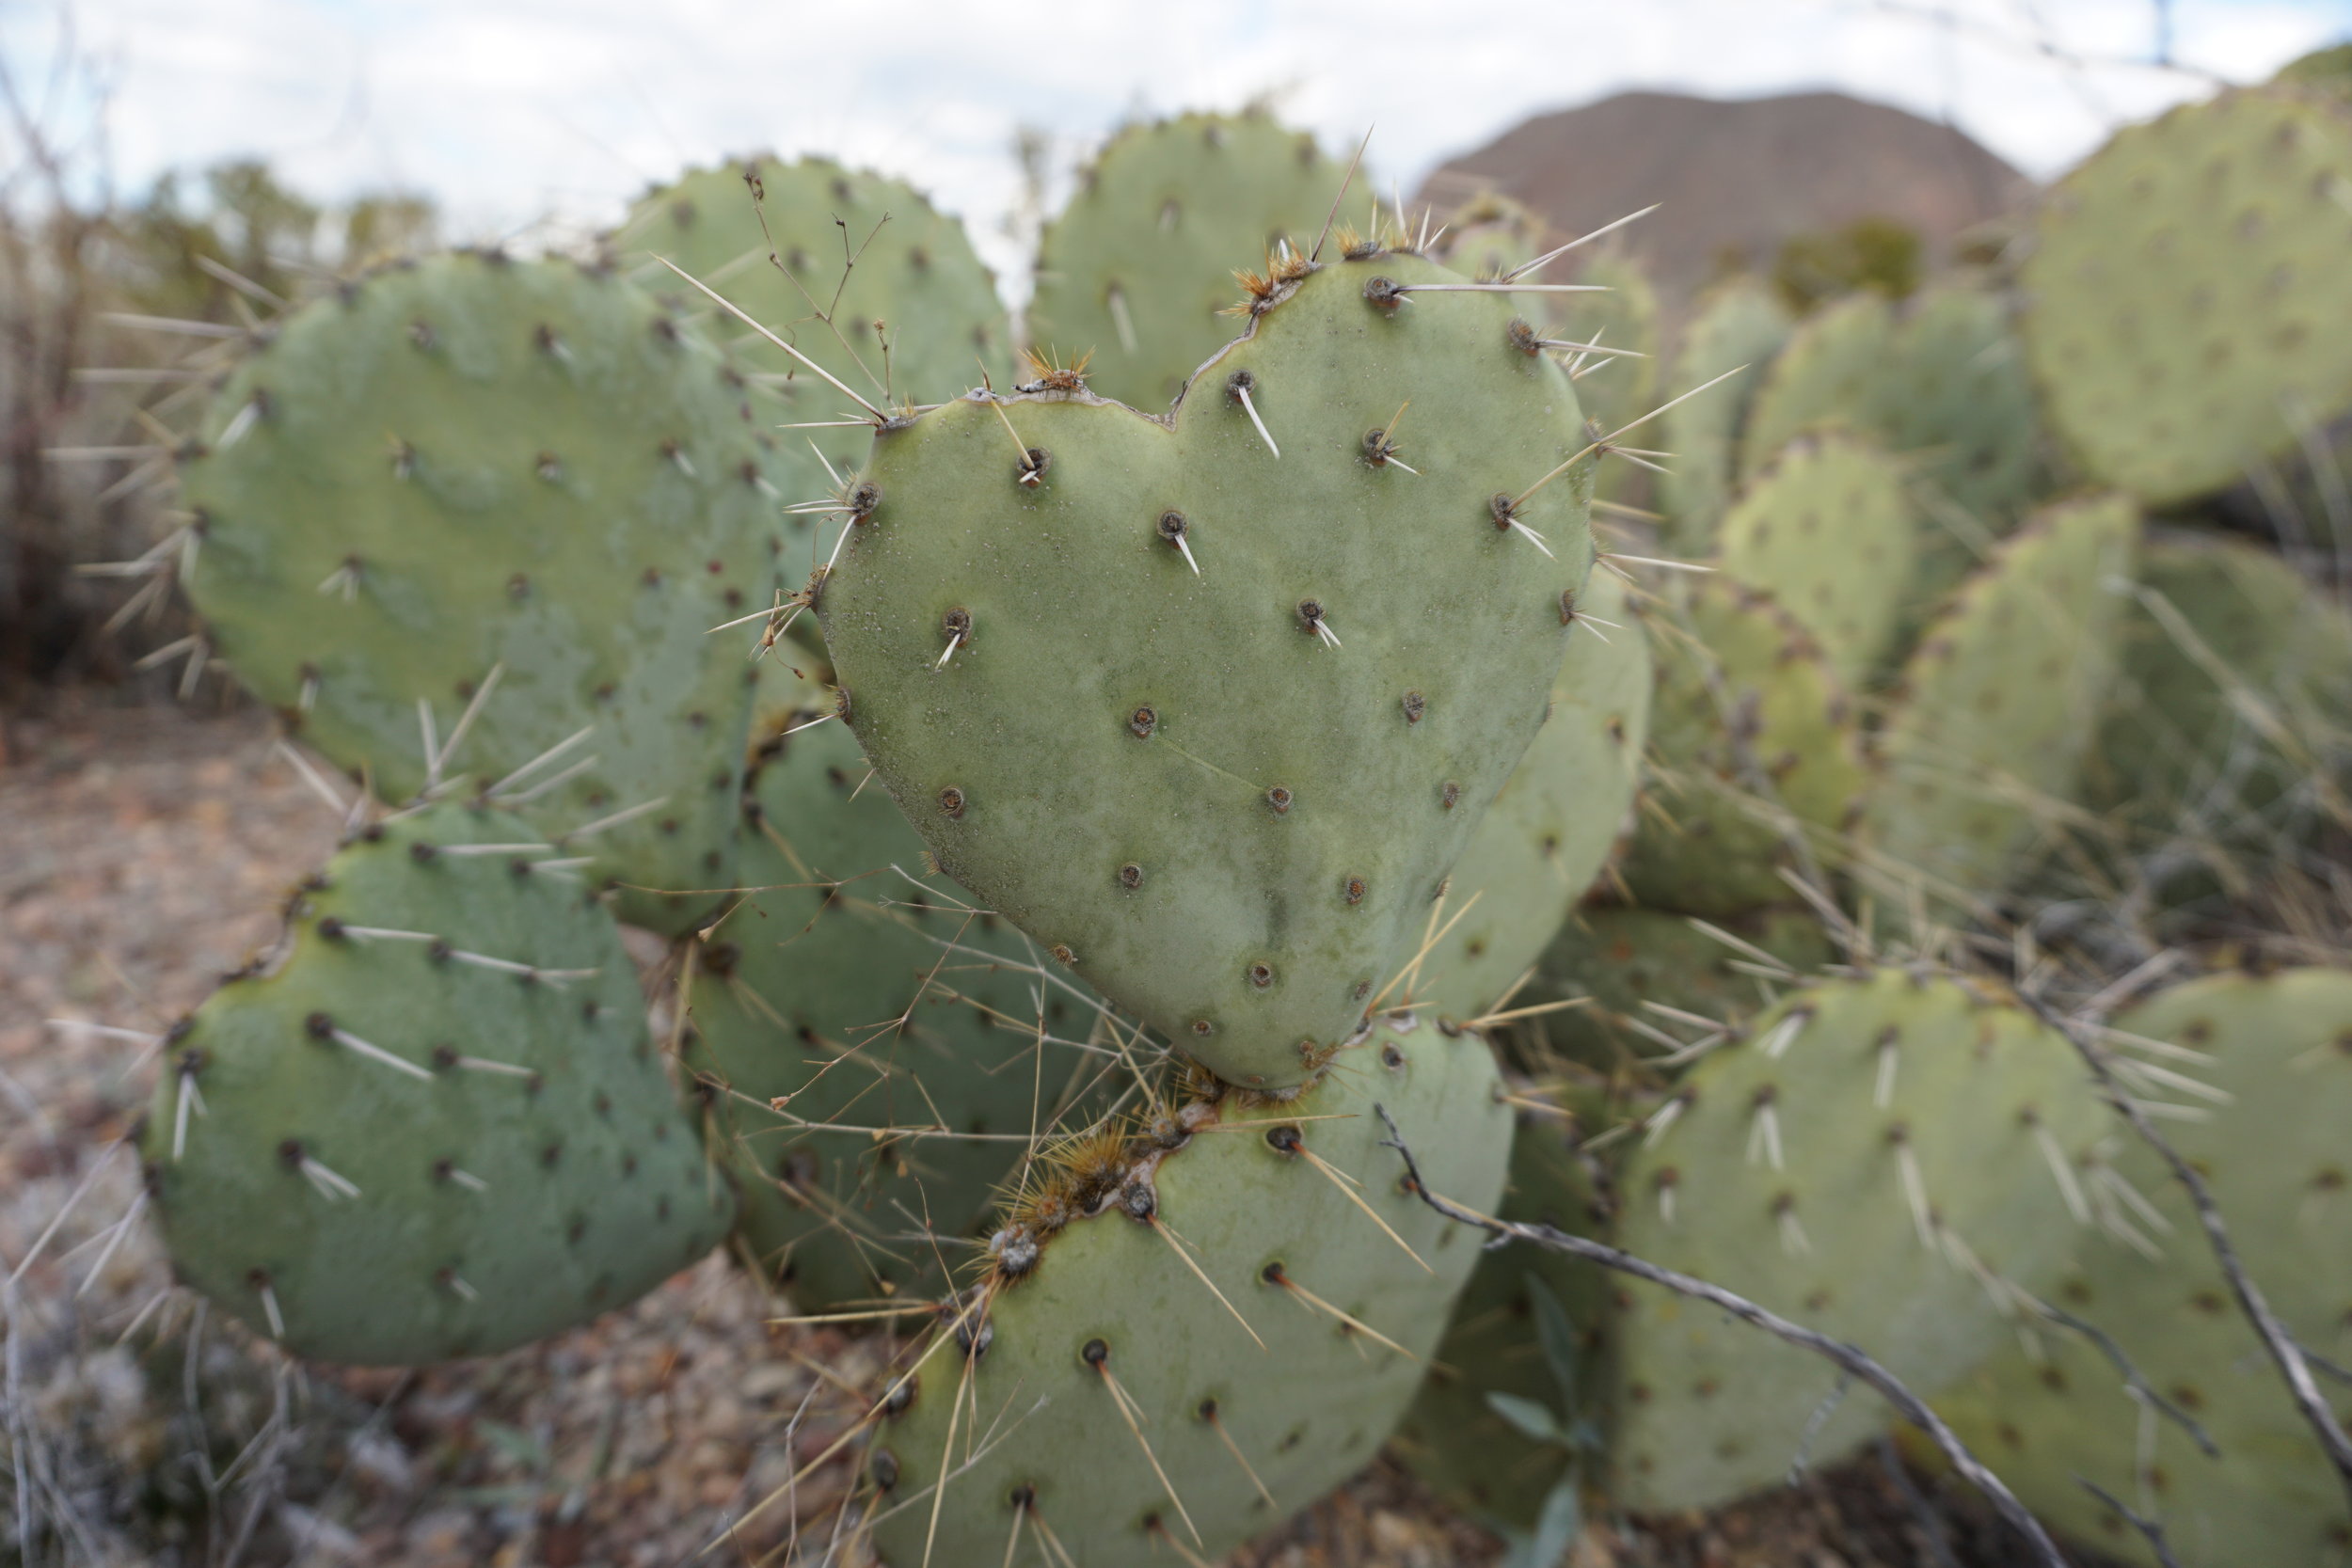 Prickly pear cactus in Texas desert